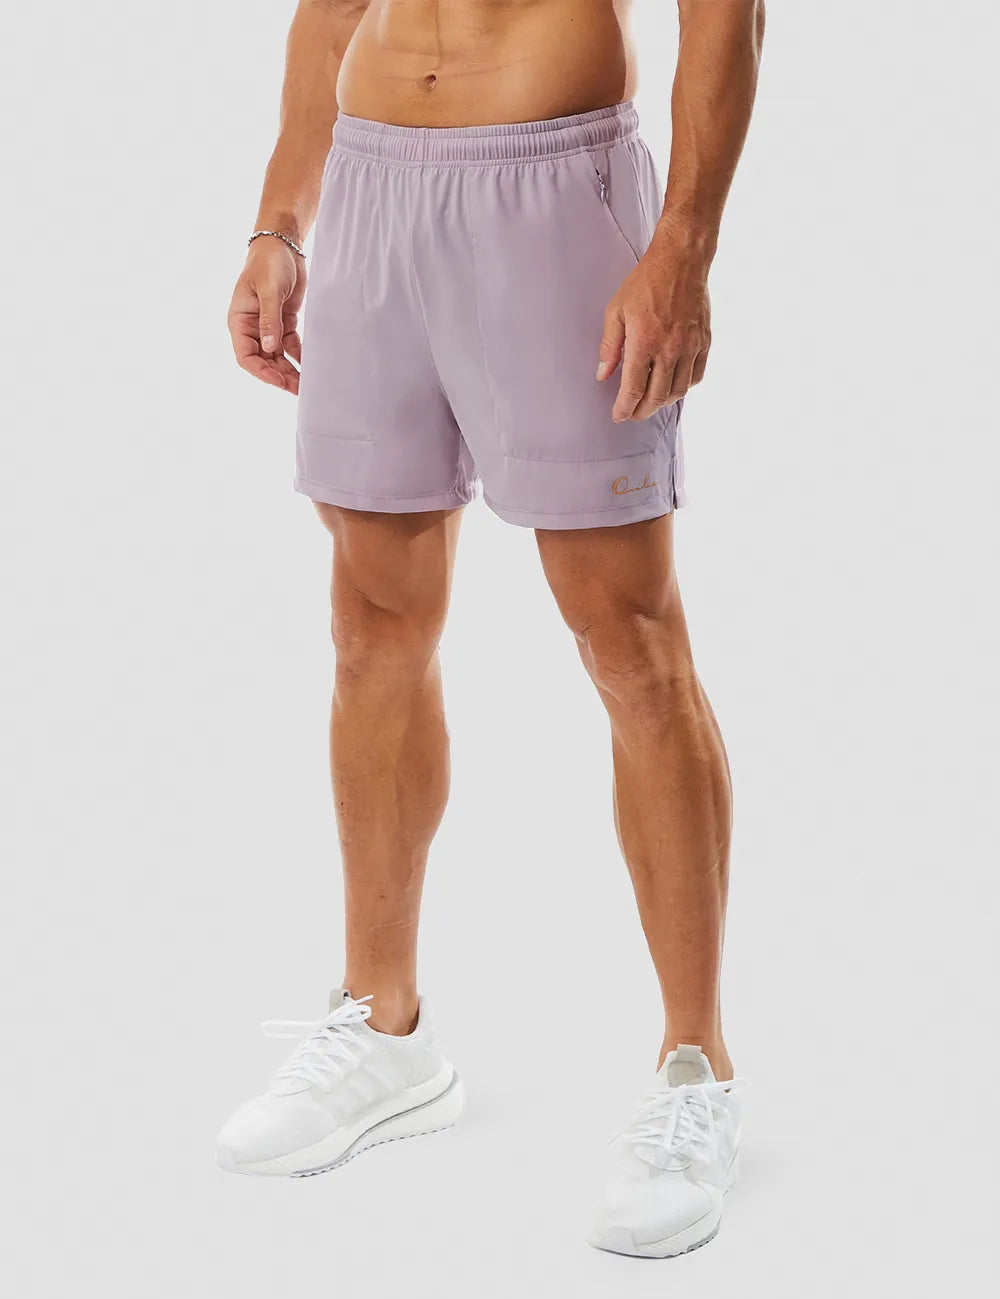 Athletic Gym Shorts 5''